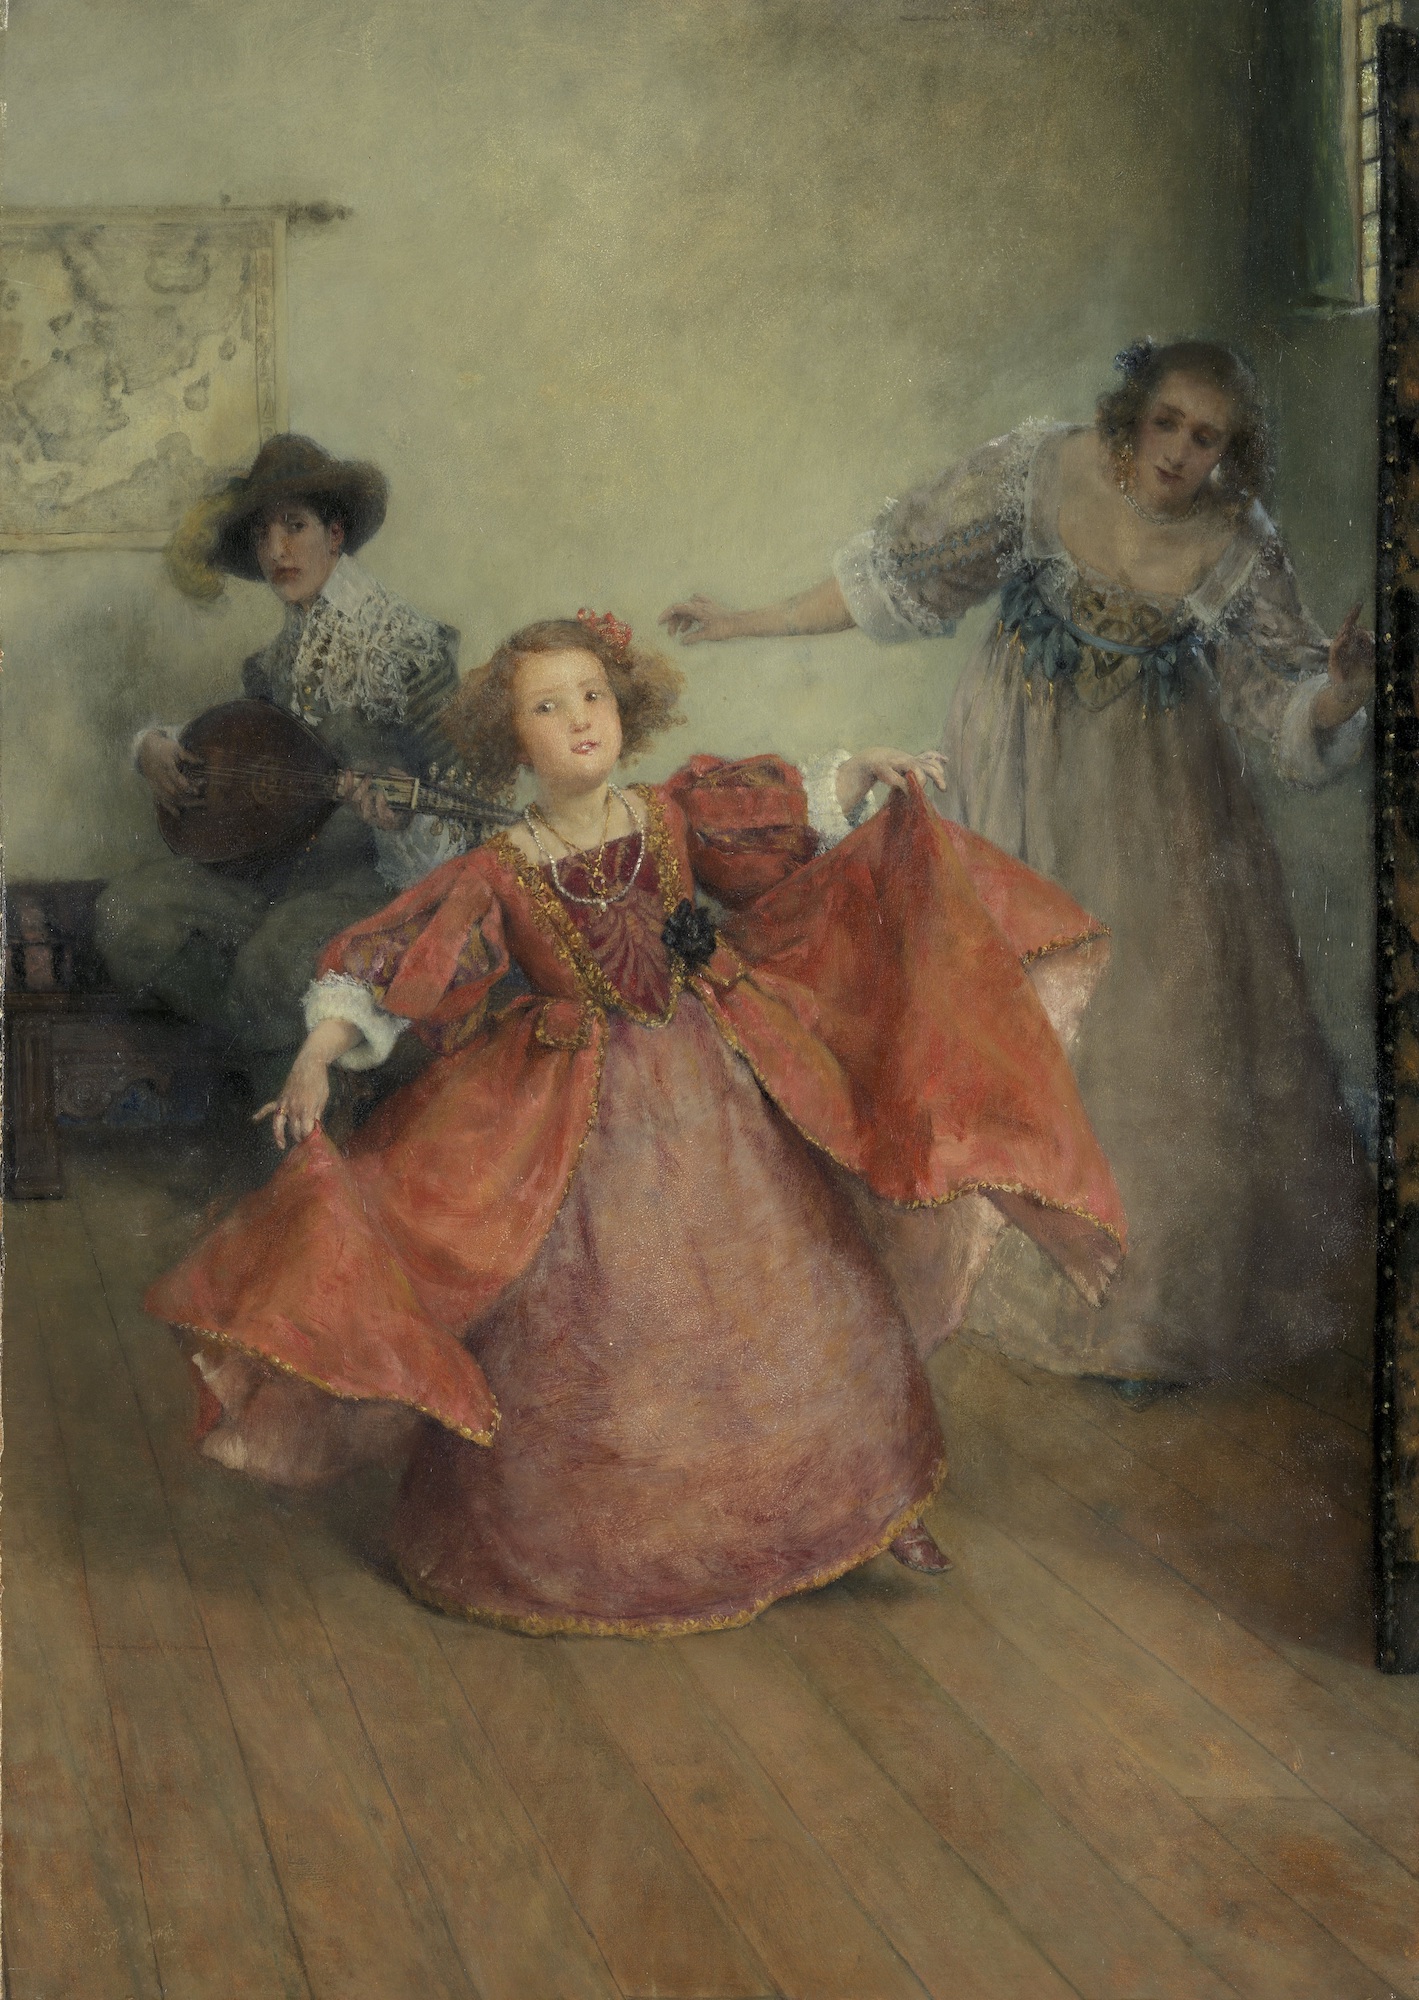 Laura Theresa Alma Tadema - 16. April 1852 - 15. August 1909